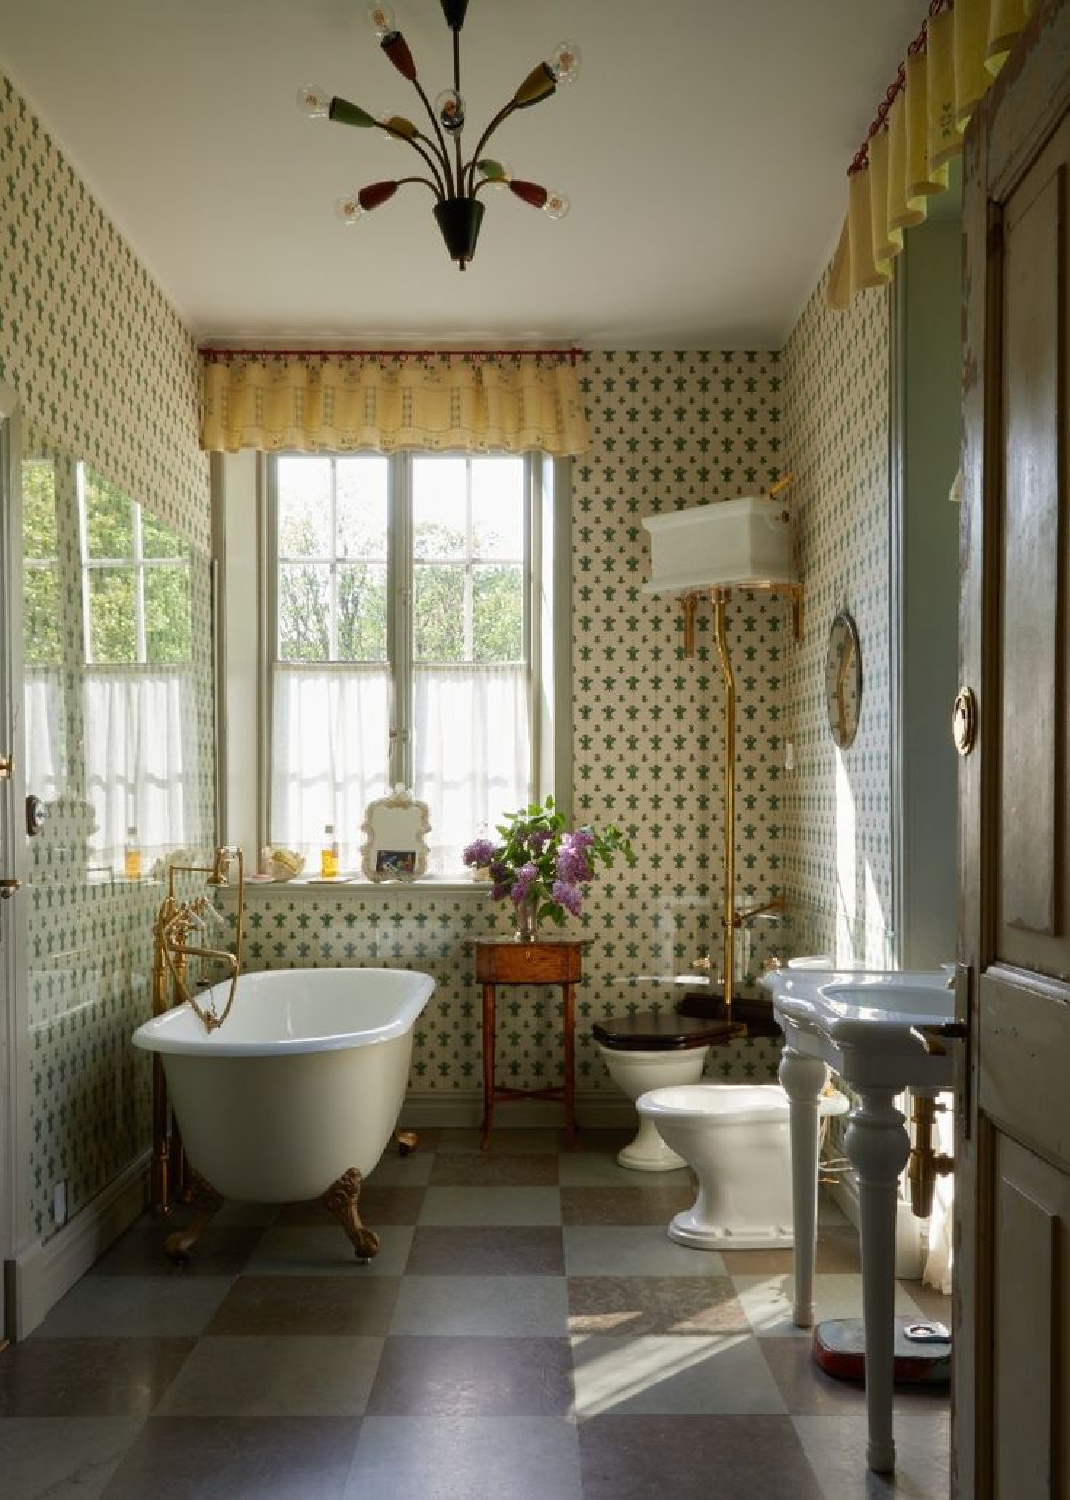 Beautiful bathroom - Simon Brown photo and Beata Heuman interior design. #beataheuman #swedishfarmhouse